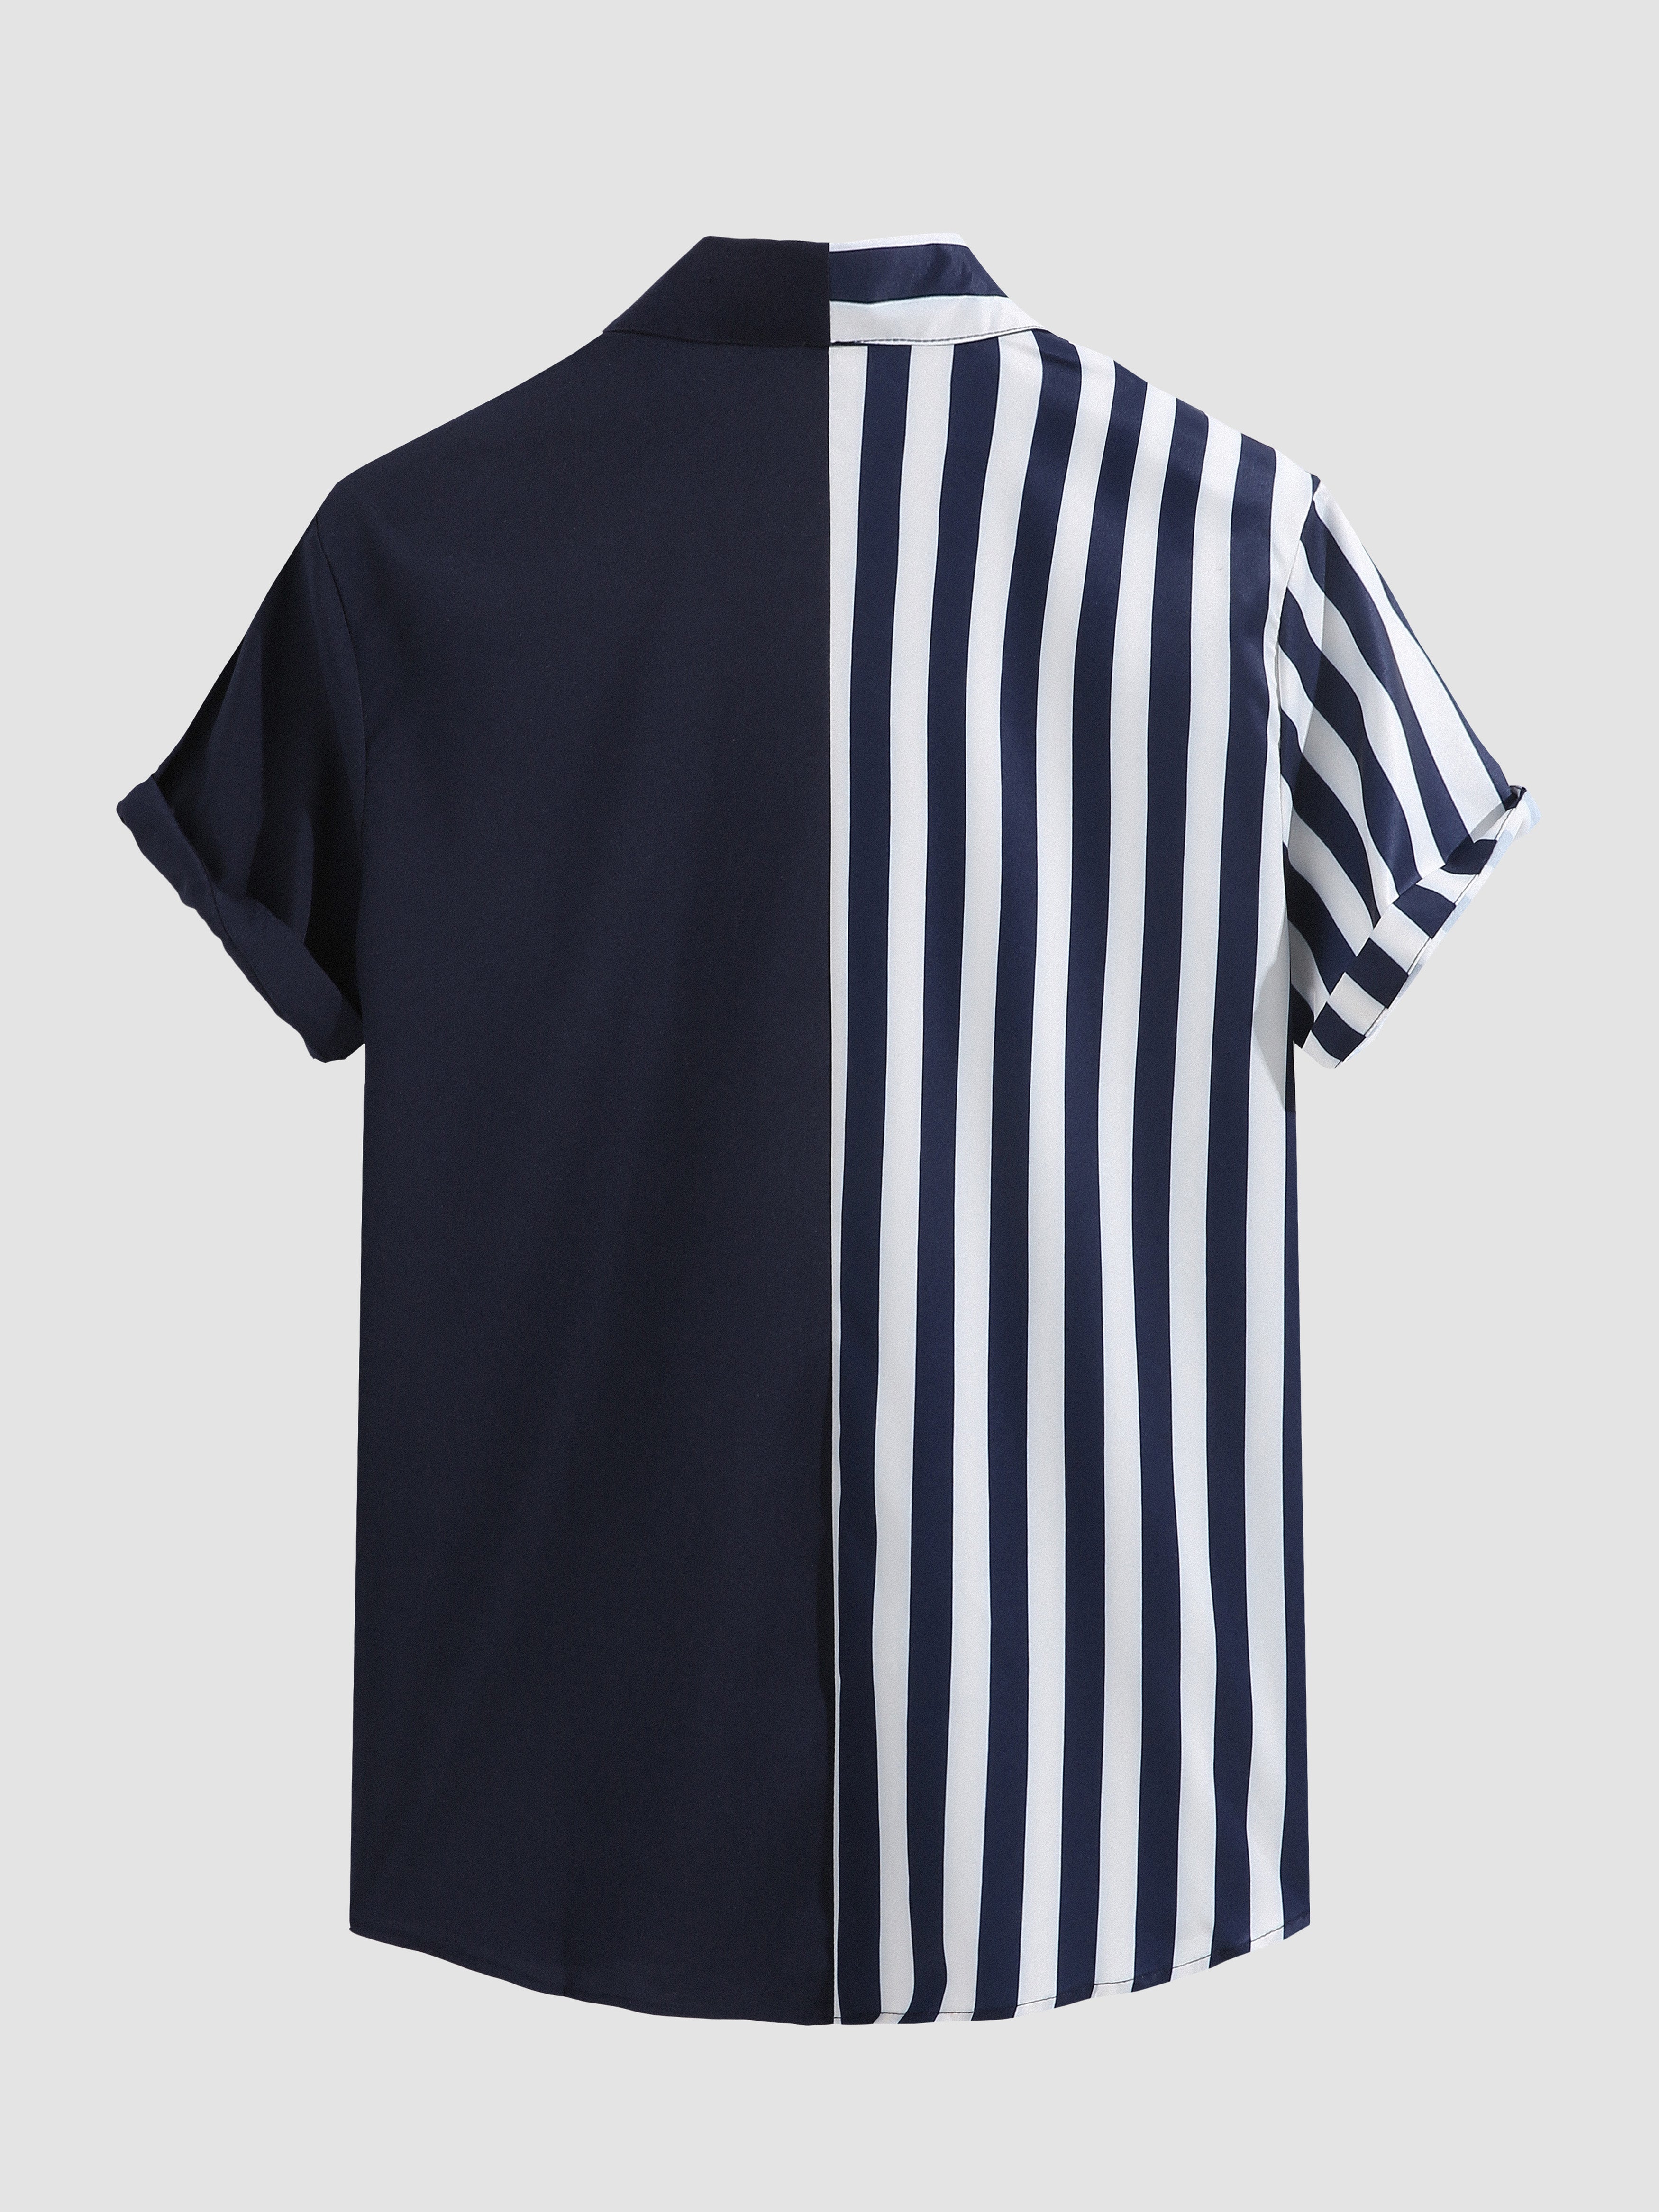 Patchwork Stripes Short Sleeve Shirts